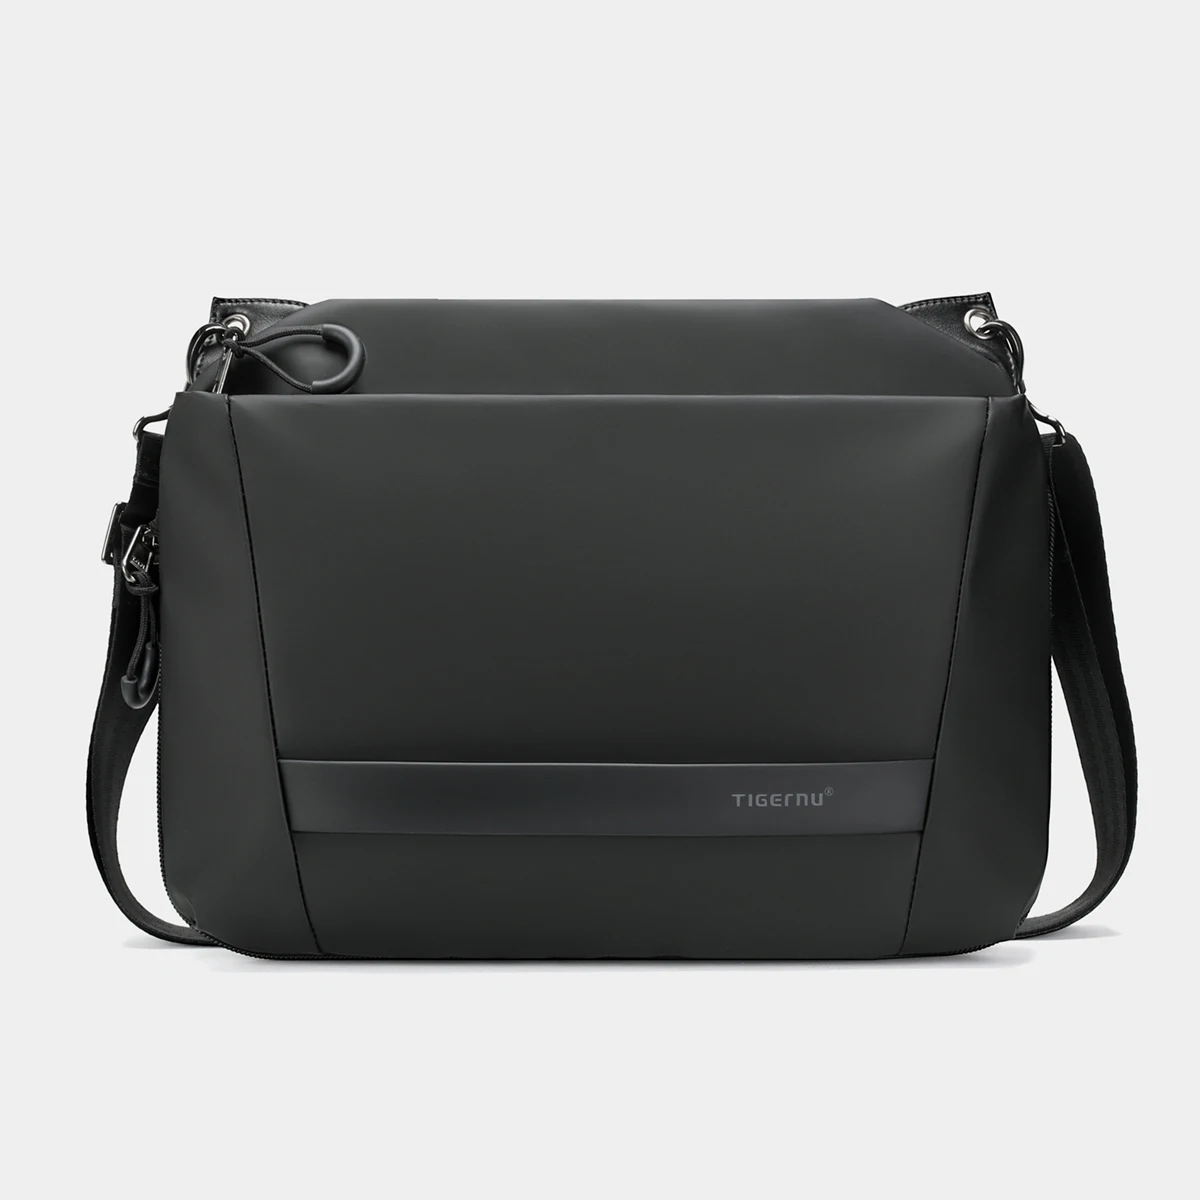 Lifetime Warranty Crossbody Bag For Men Expandable 9 inch TPU Casual Sho... - $32.51